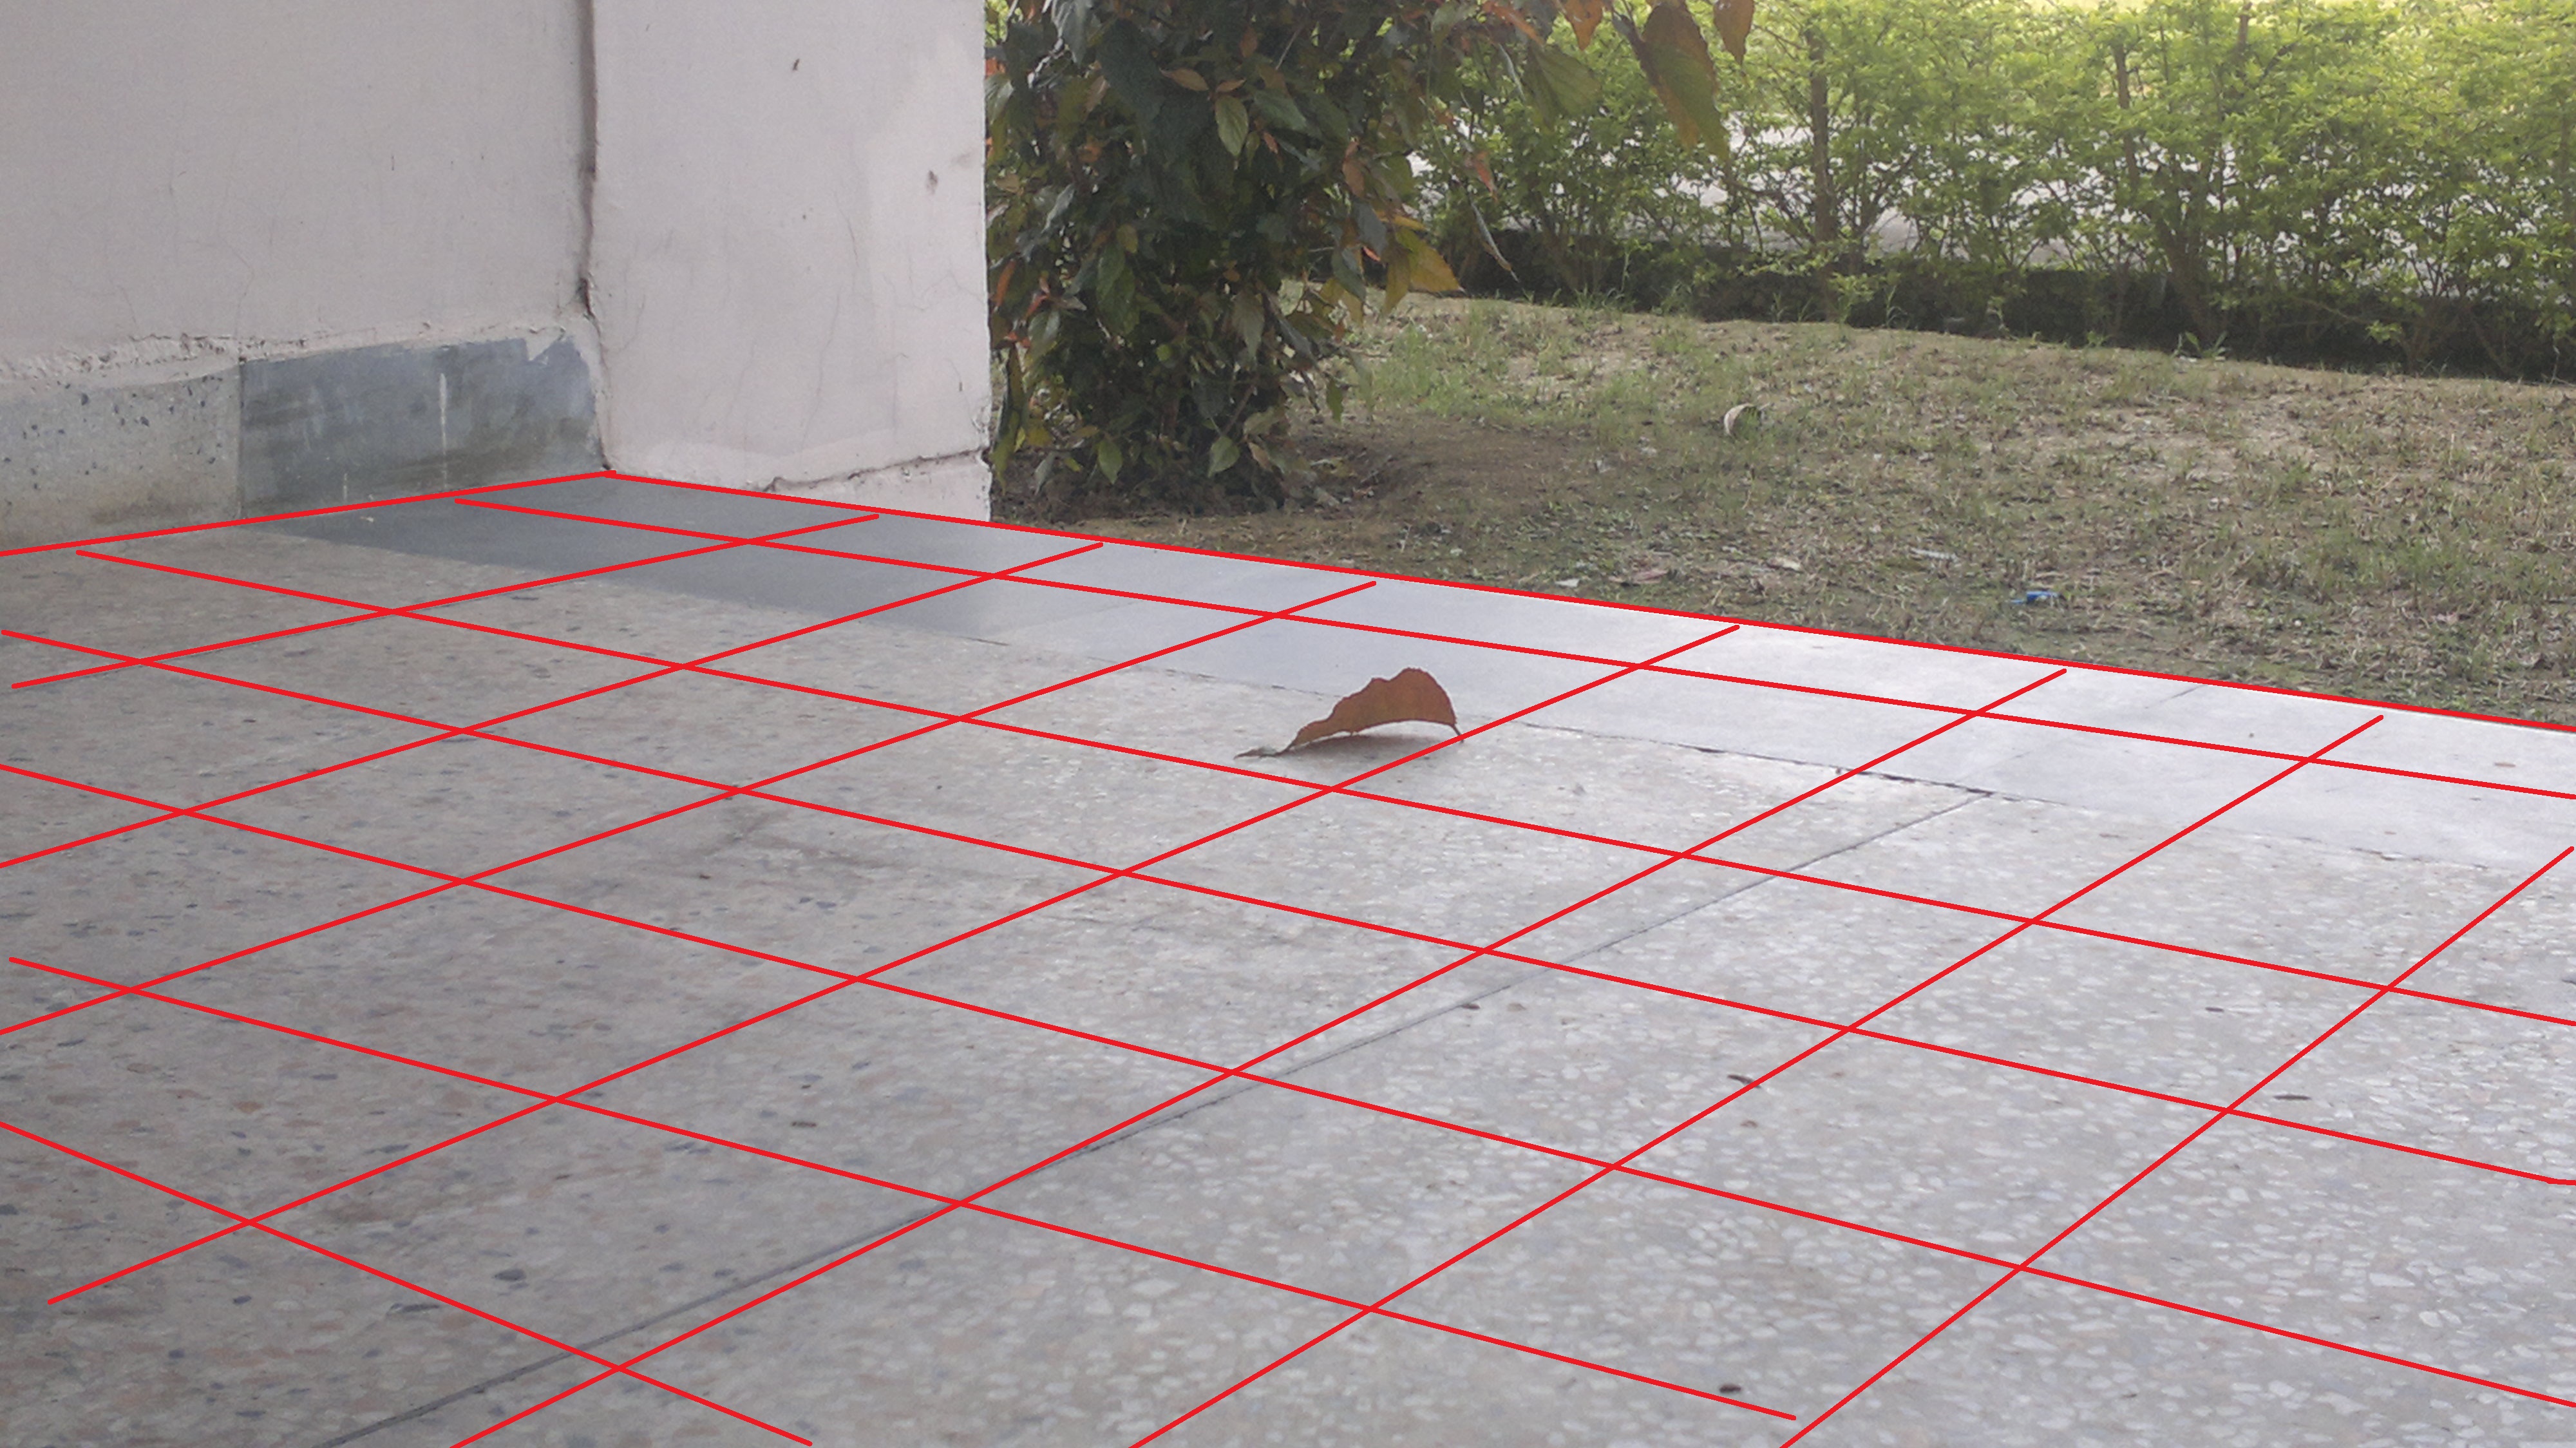 Generate Grid on floor for determining relative distances